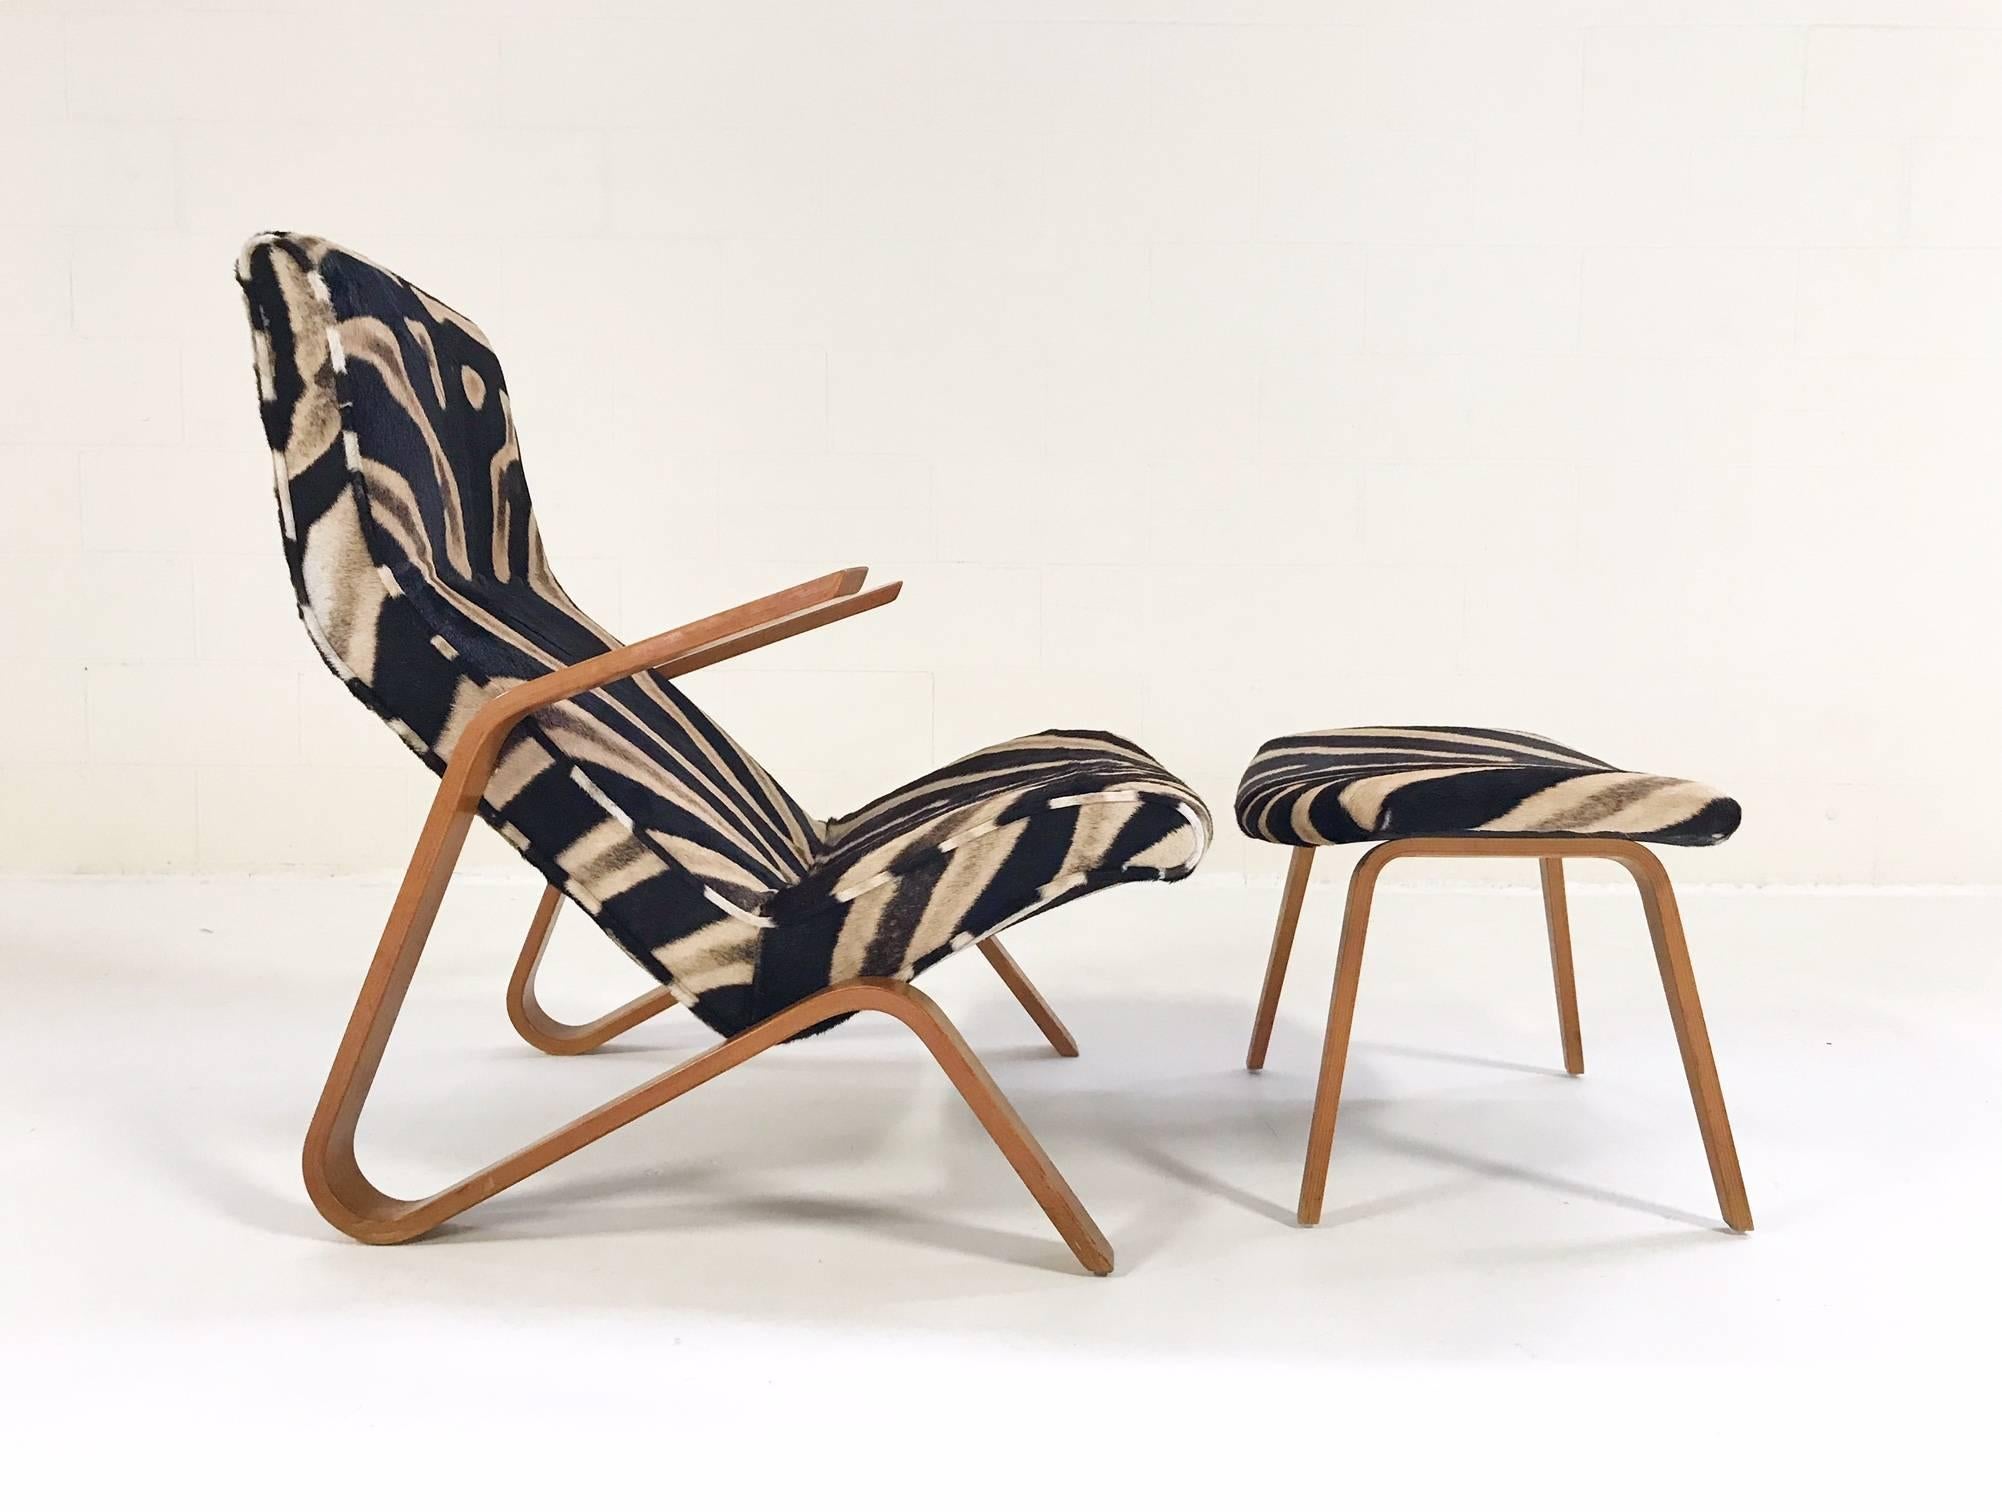 20th Century Eero Saarinen for Knoll Grasshopper Chair and Ottoman in Zebra Hide